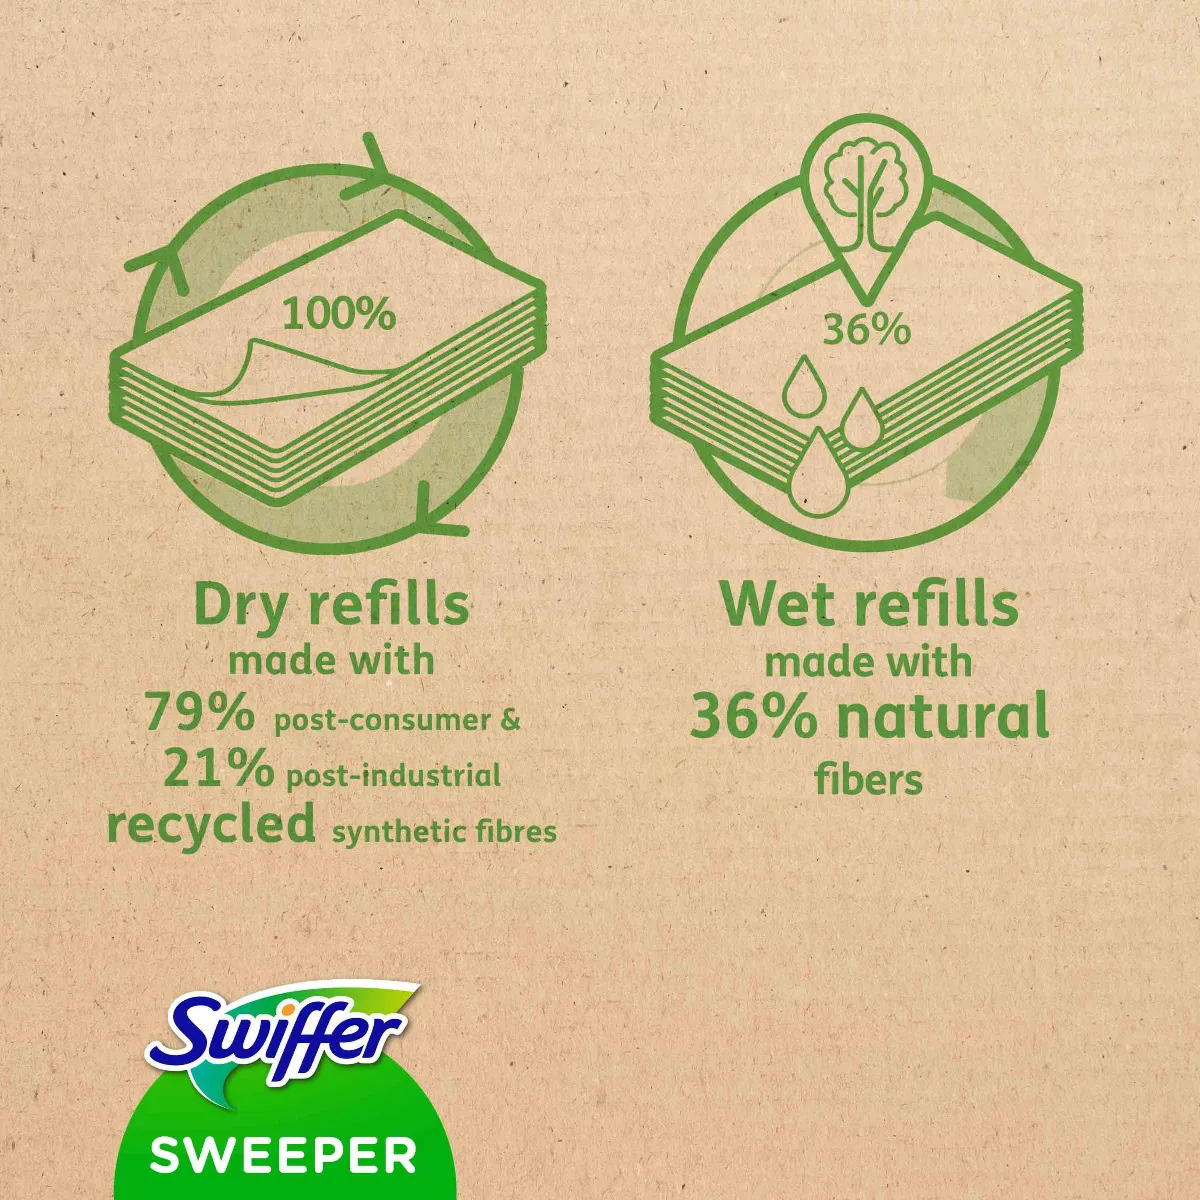 Swiffer Sweeper Startovací sada na suchý i mokrý úklid 